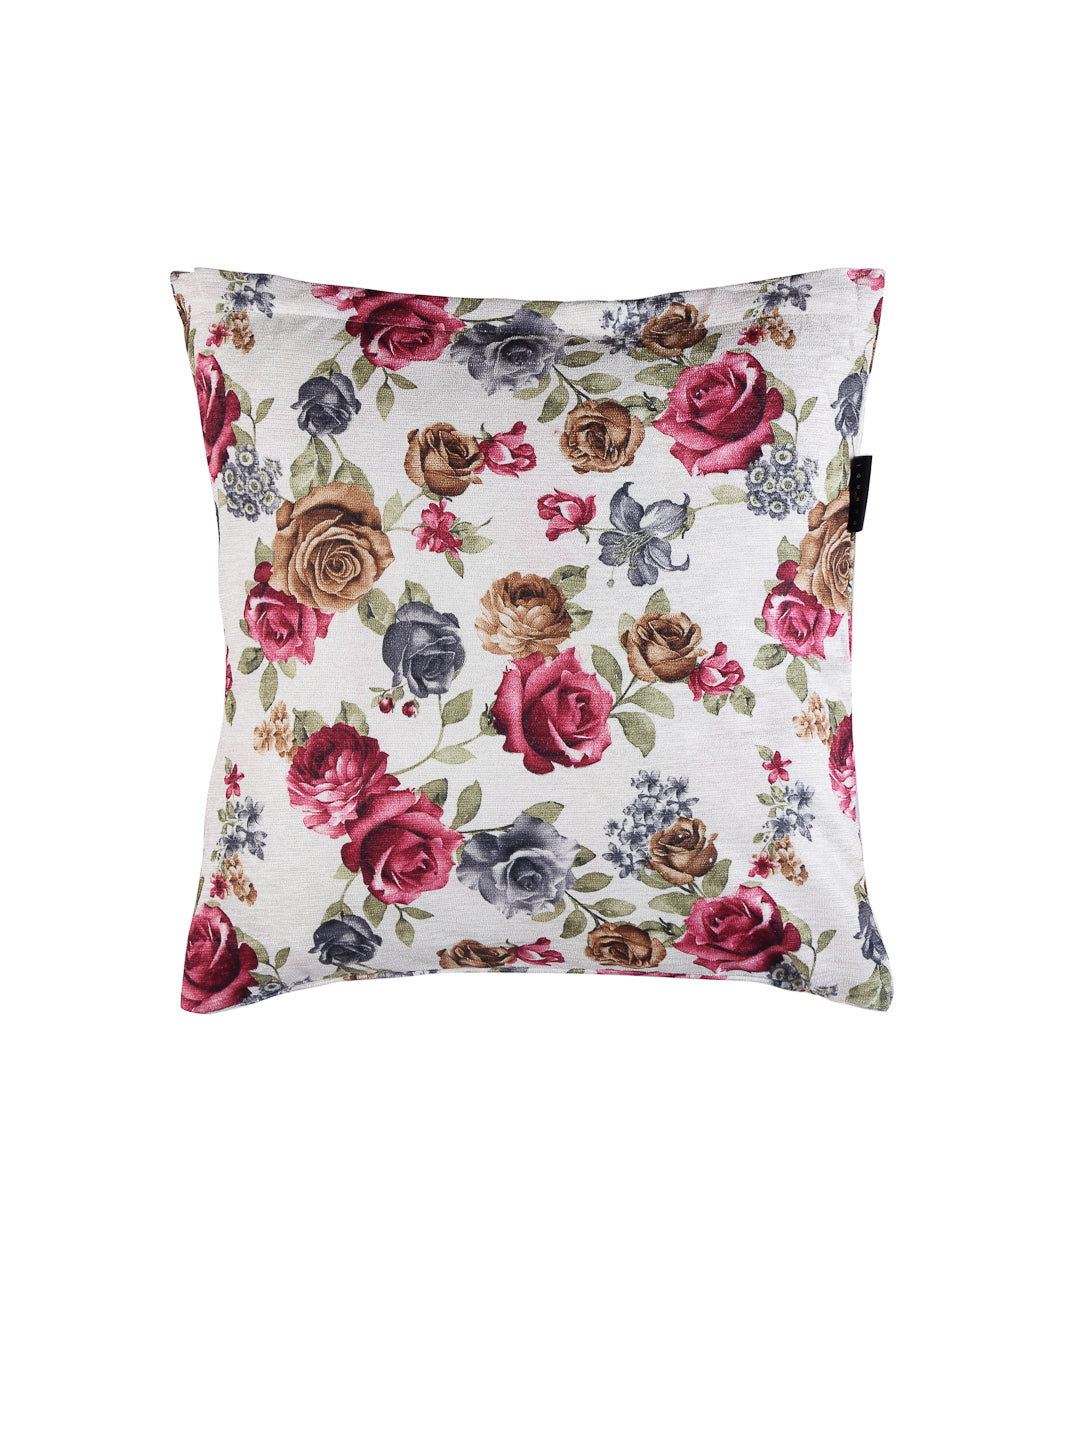 Arrabi Pink Floral TC Cotton Blend Cushion Covers (Pack of 5) (40 x 40 cm)